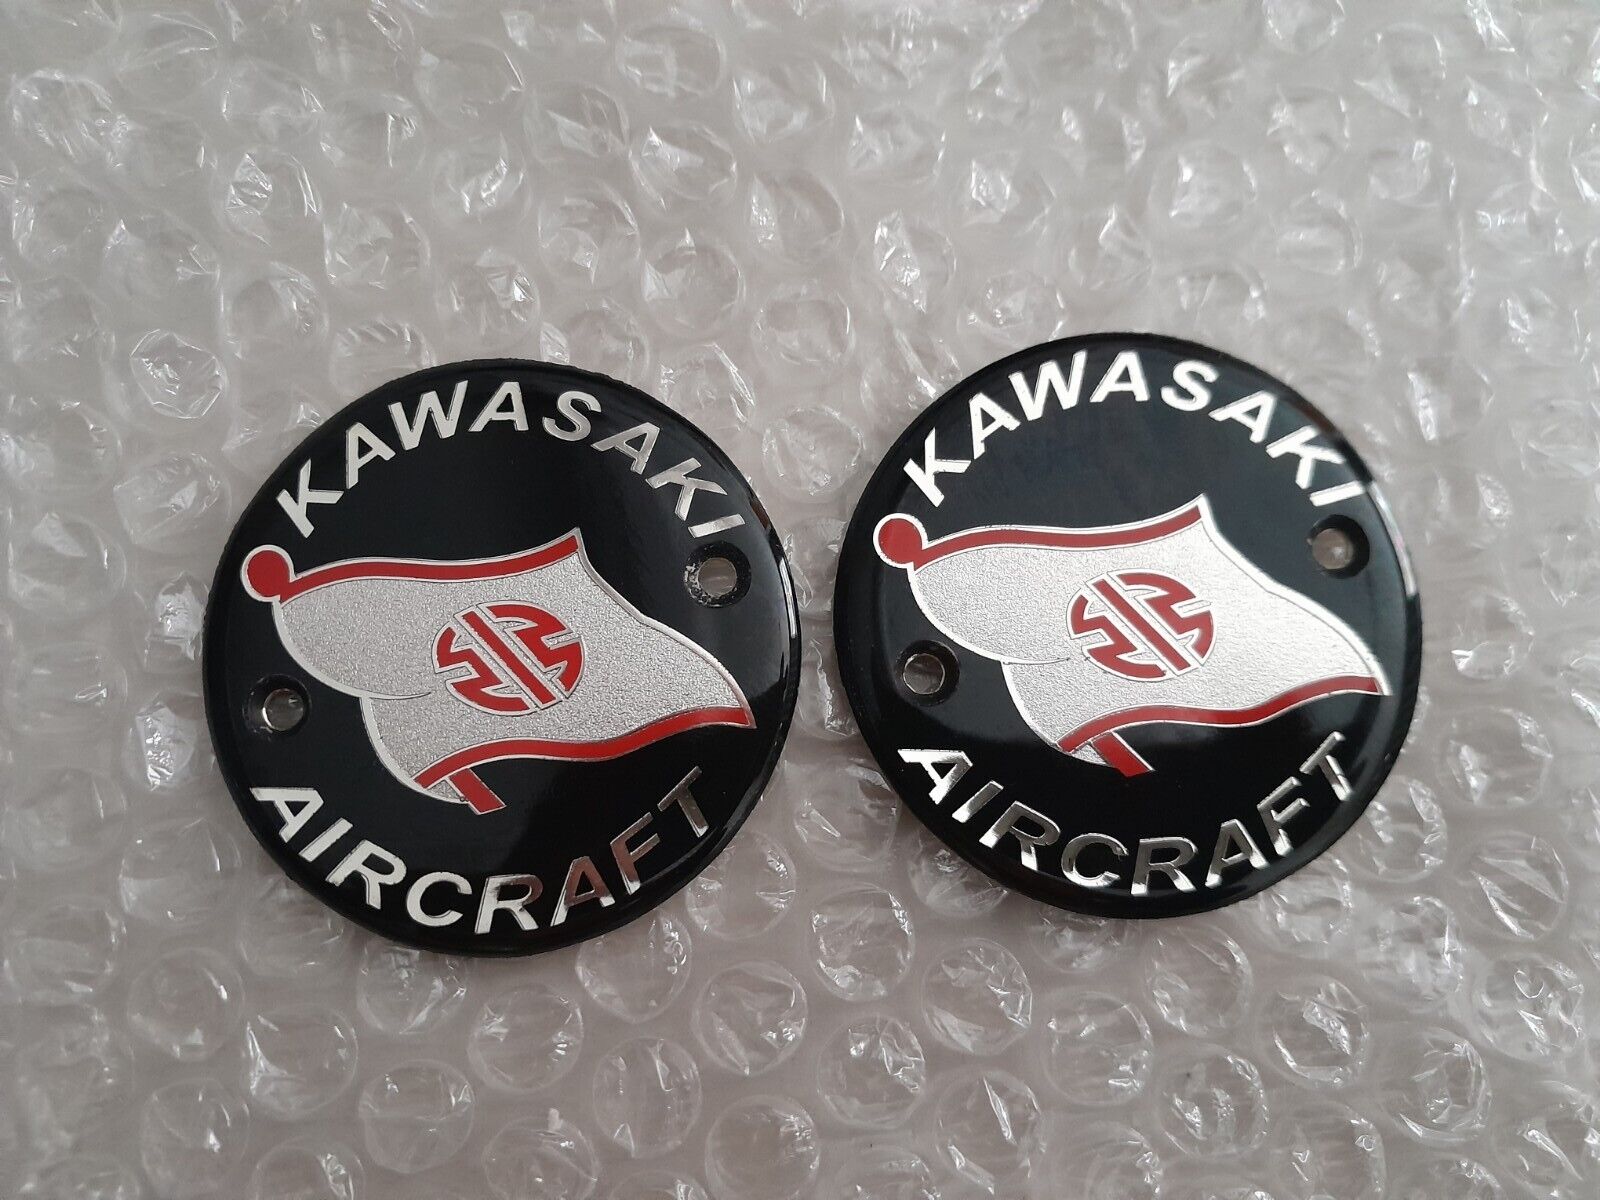 Kawasaki Air Cract 1966 B8 #Kawasaki Gas Tank Emblem Badge  Pair